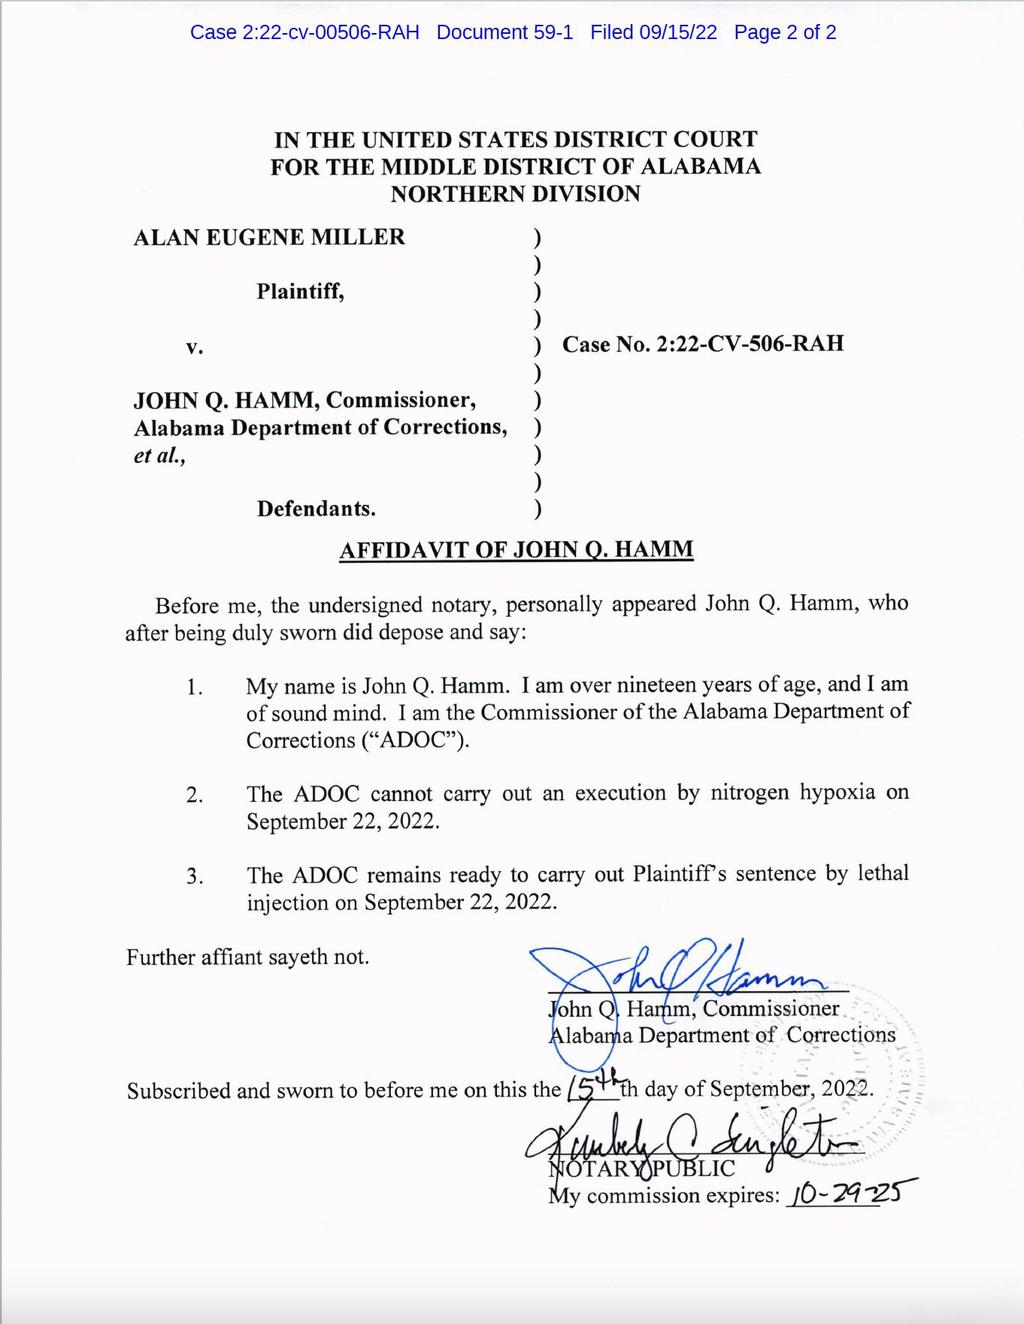 Alabama Prosecutors Float, Then Retreat From, Plan to Execute Alan Miller Using Untested Nitrogen Suffocation Procedure